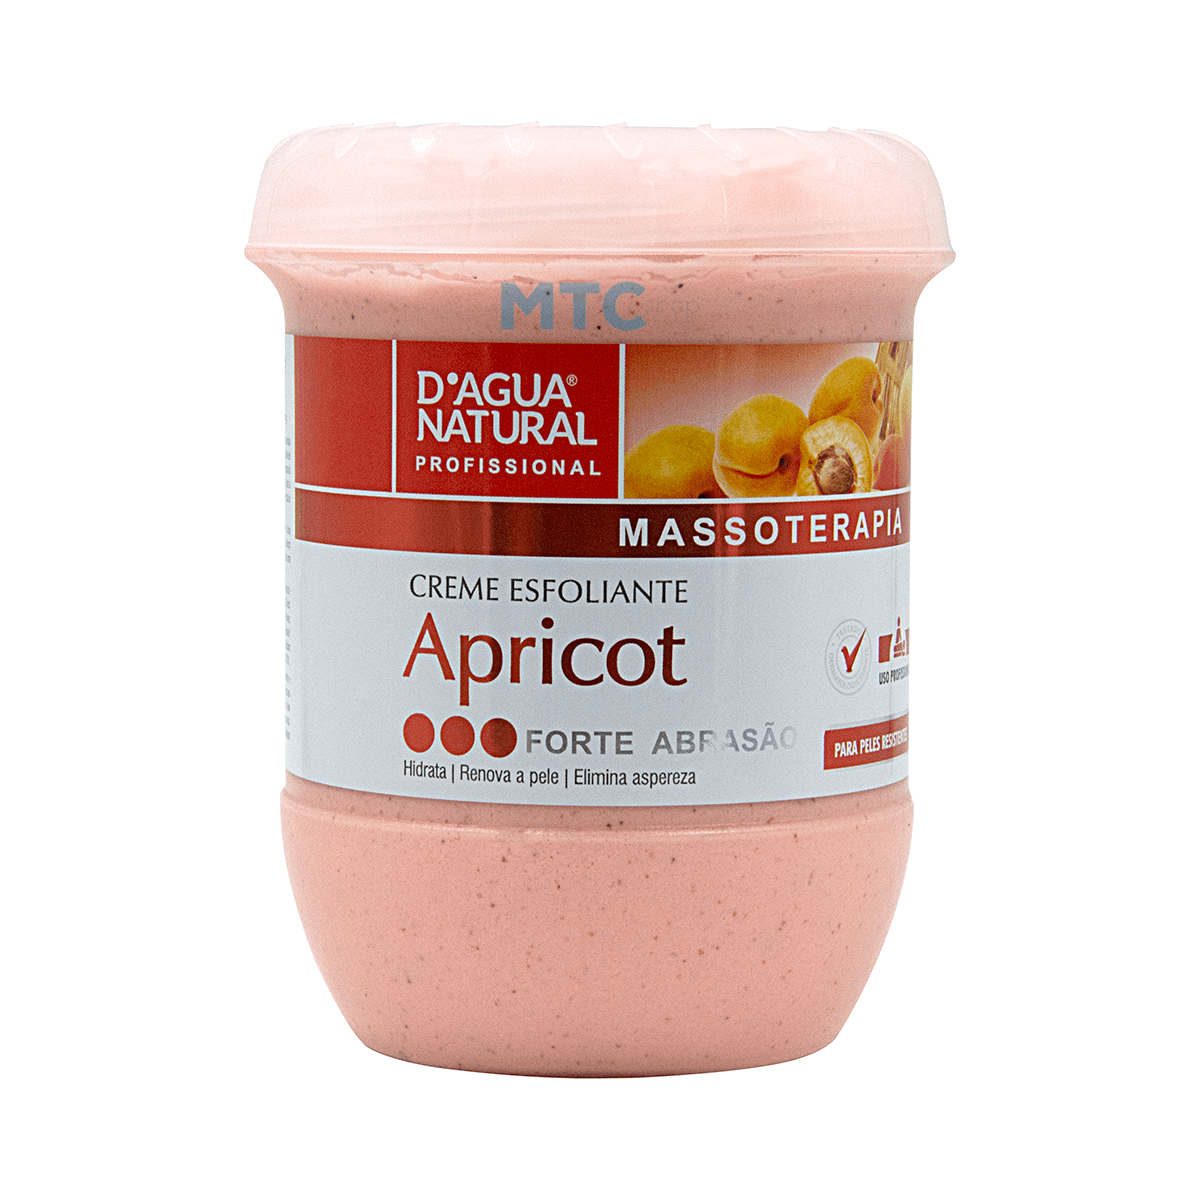 Creme Esfoliante Apricot Forte Abrasão 650g - D'Agua Natural